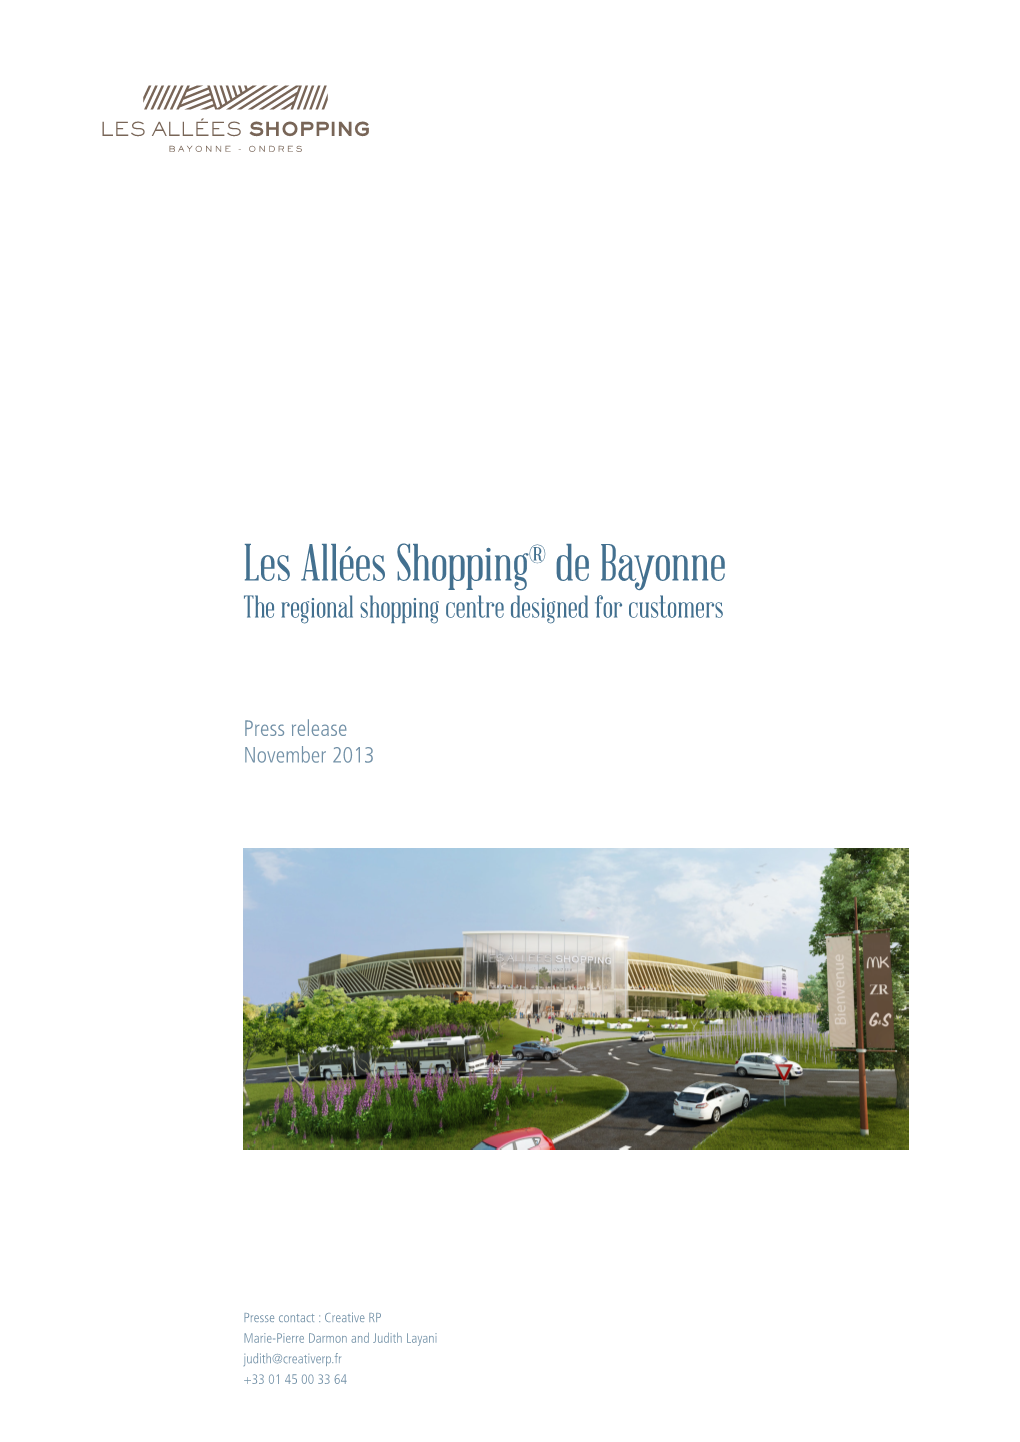 Les Allées Shopping® De Bayonne the Regional Shopping Centre Designed for Customers